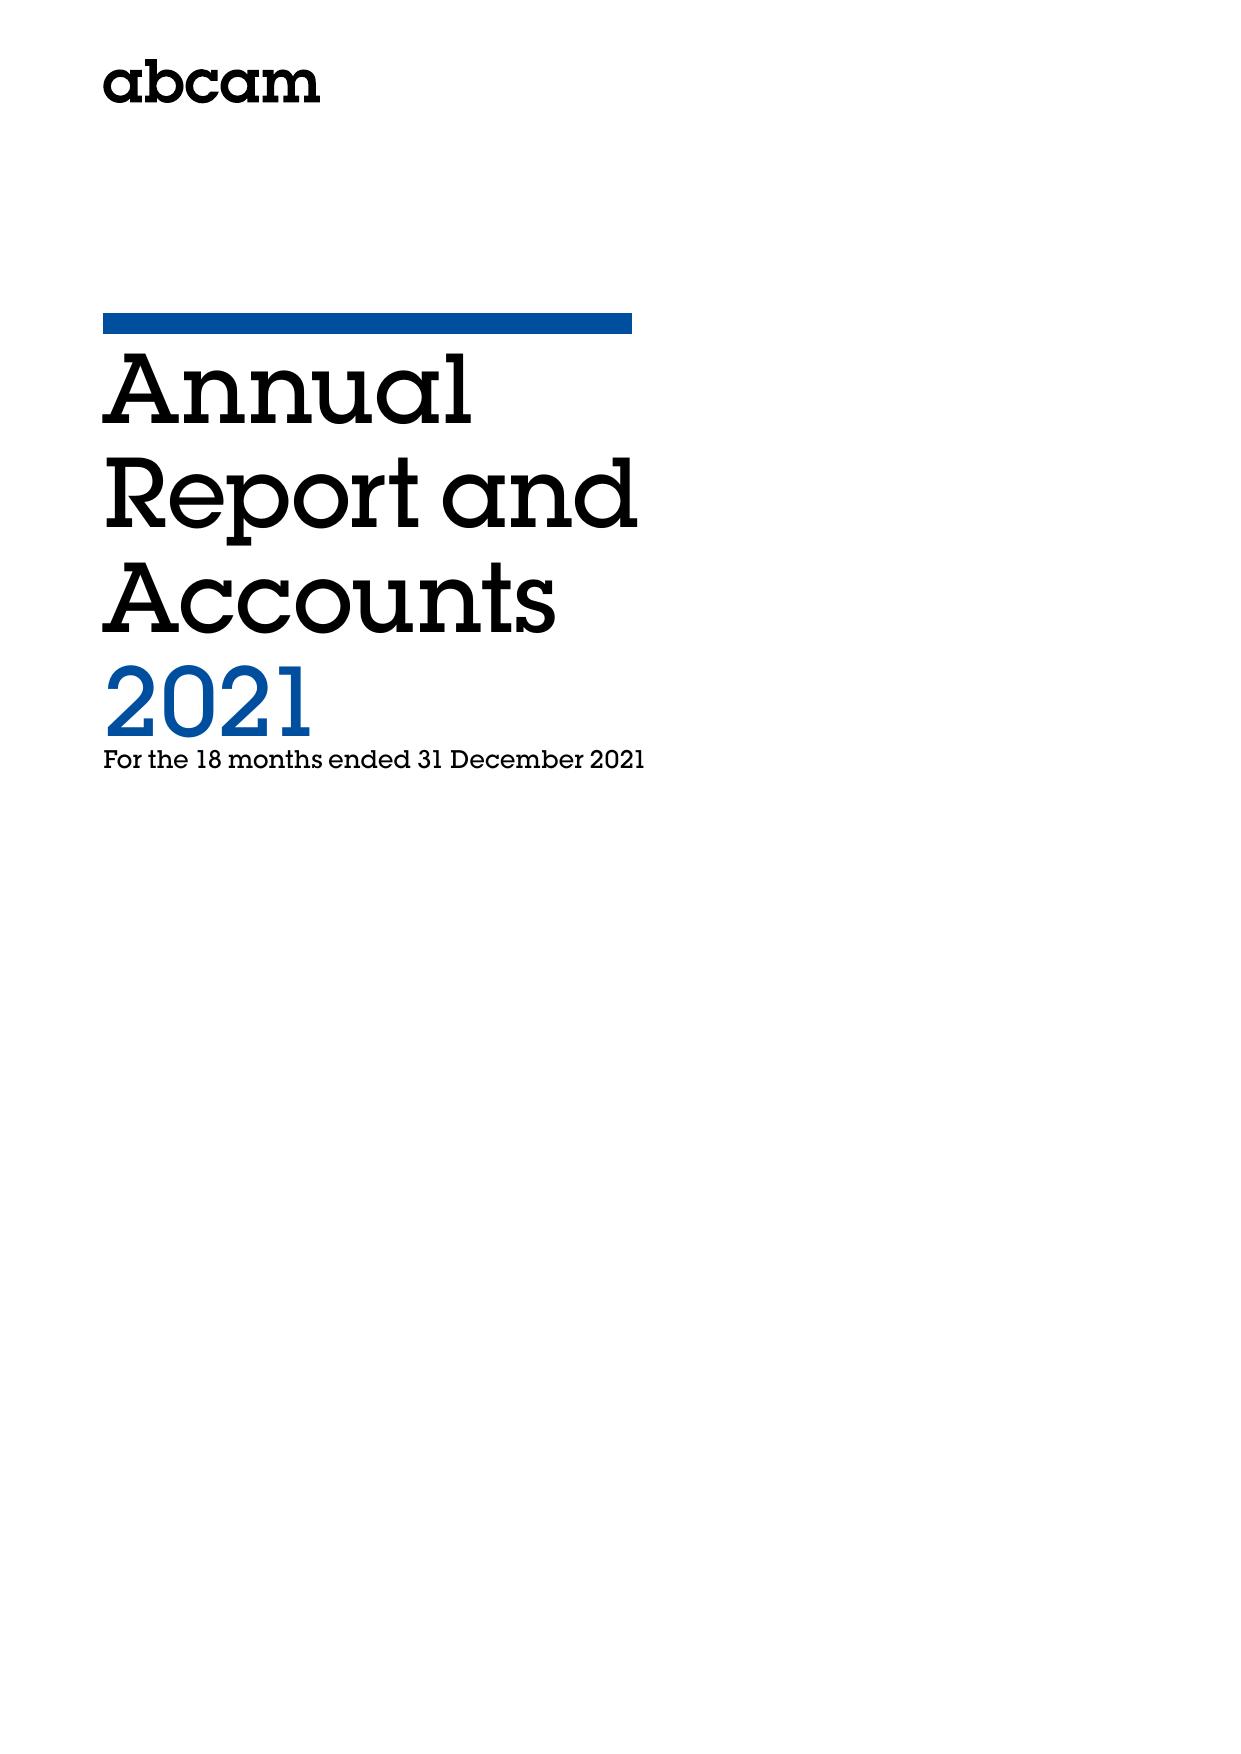 ACONLABS 2022 Annual Report